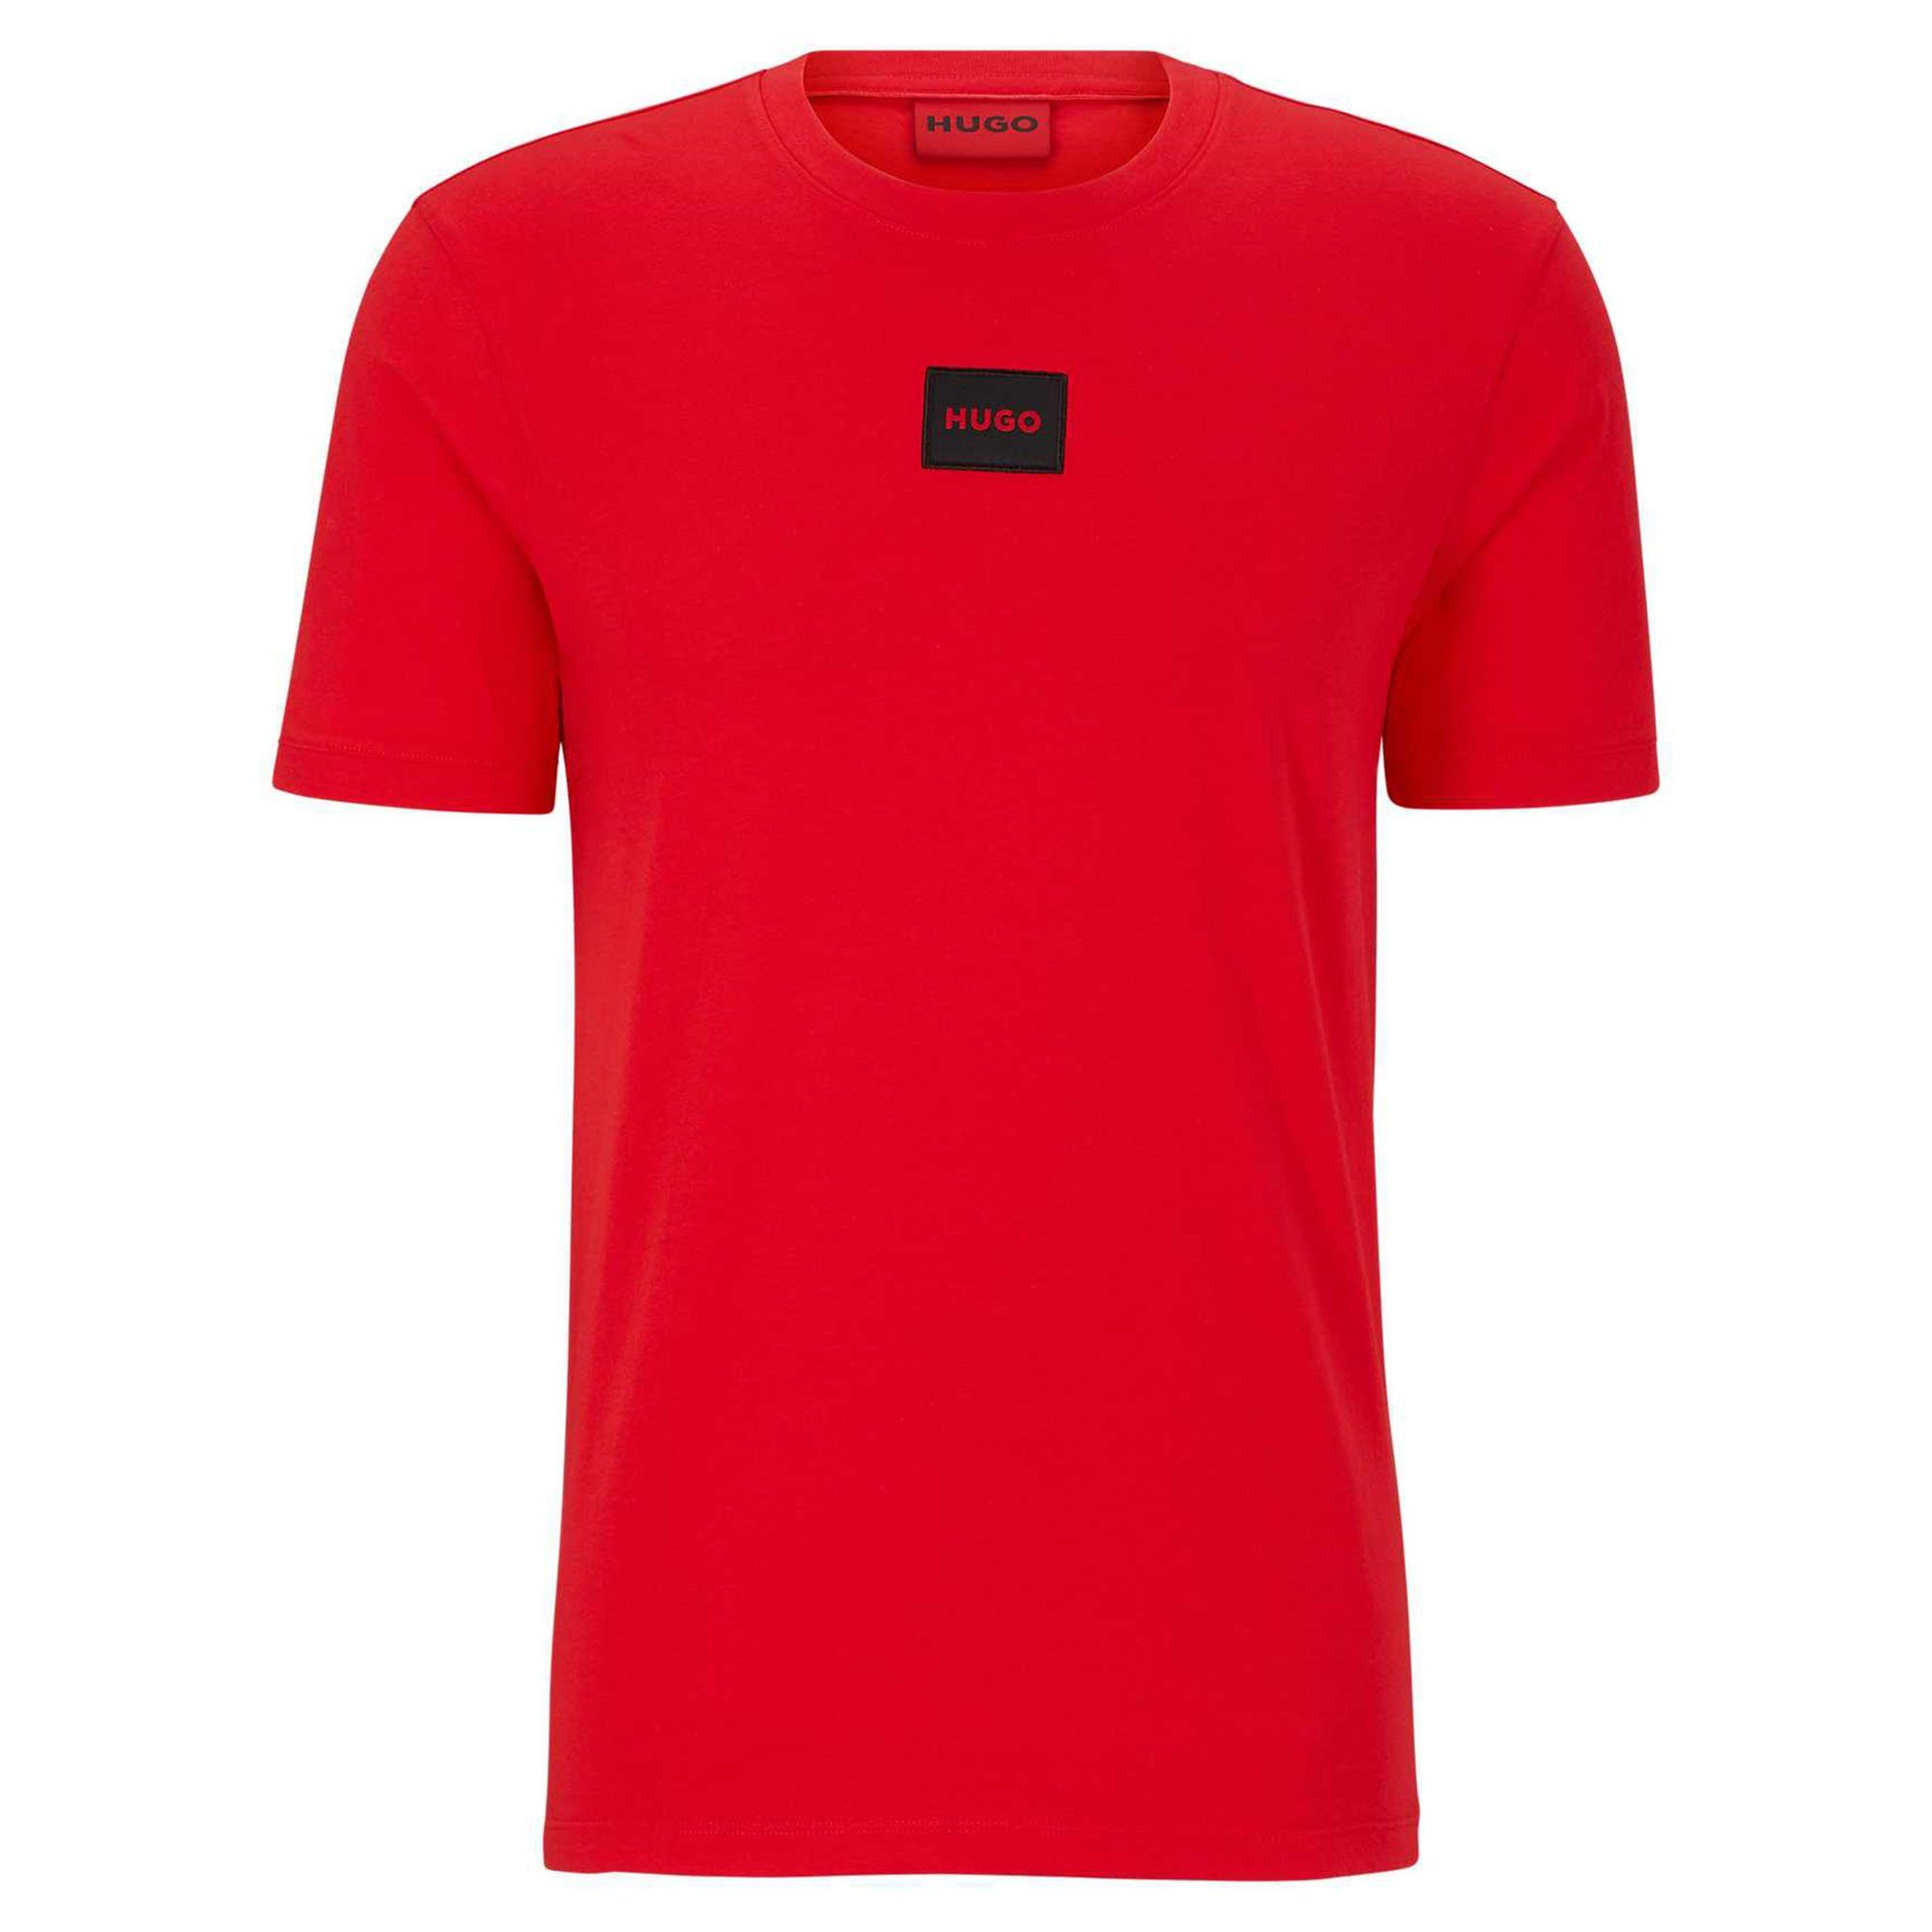 HUGO T-Shirt Herren T-Shirt Rot - Rundhals Pink) (Open Diragolino212